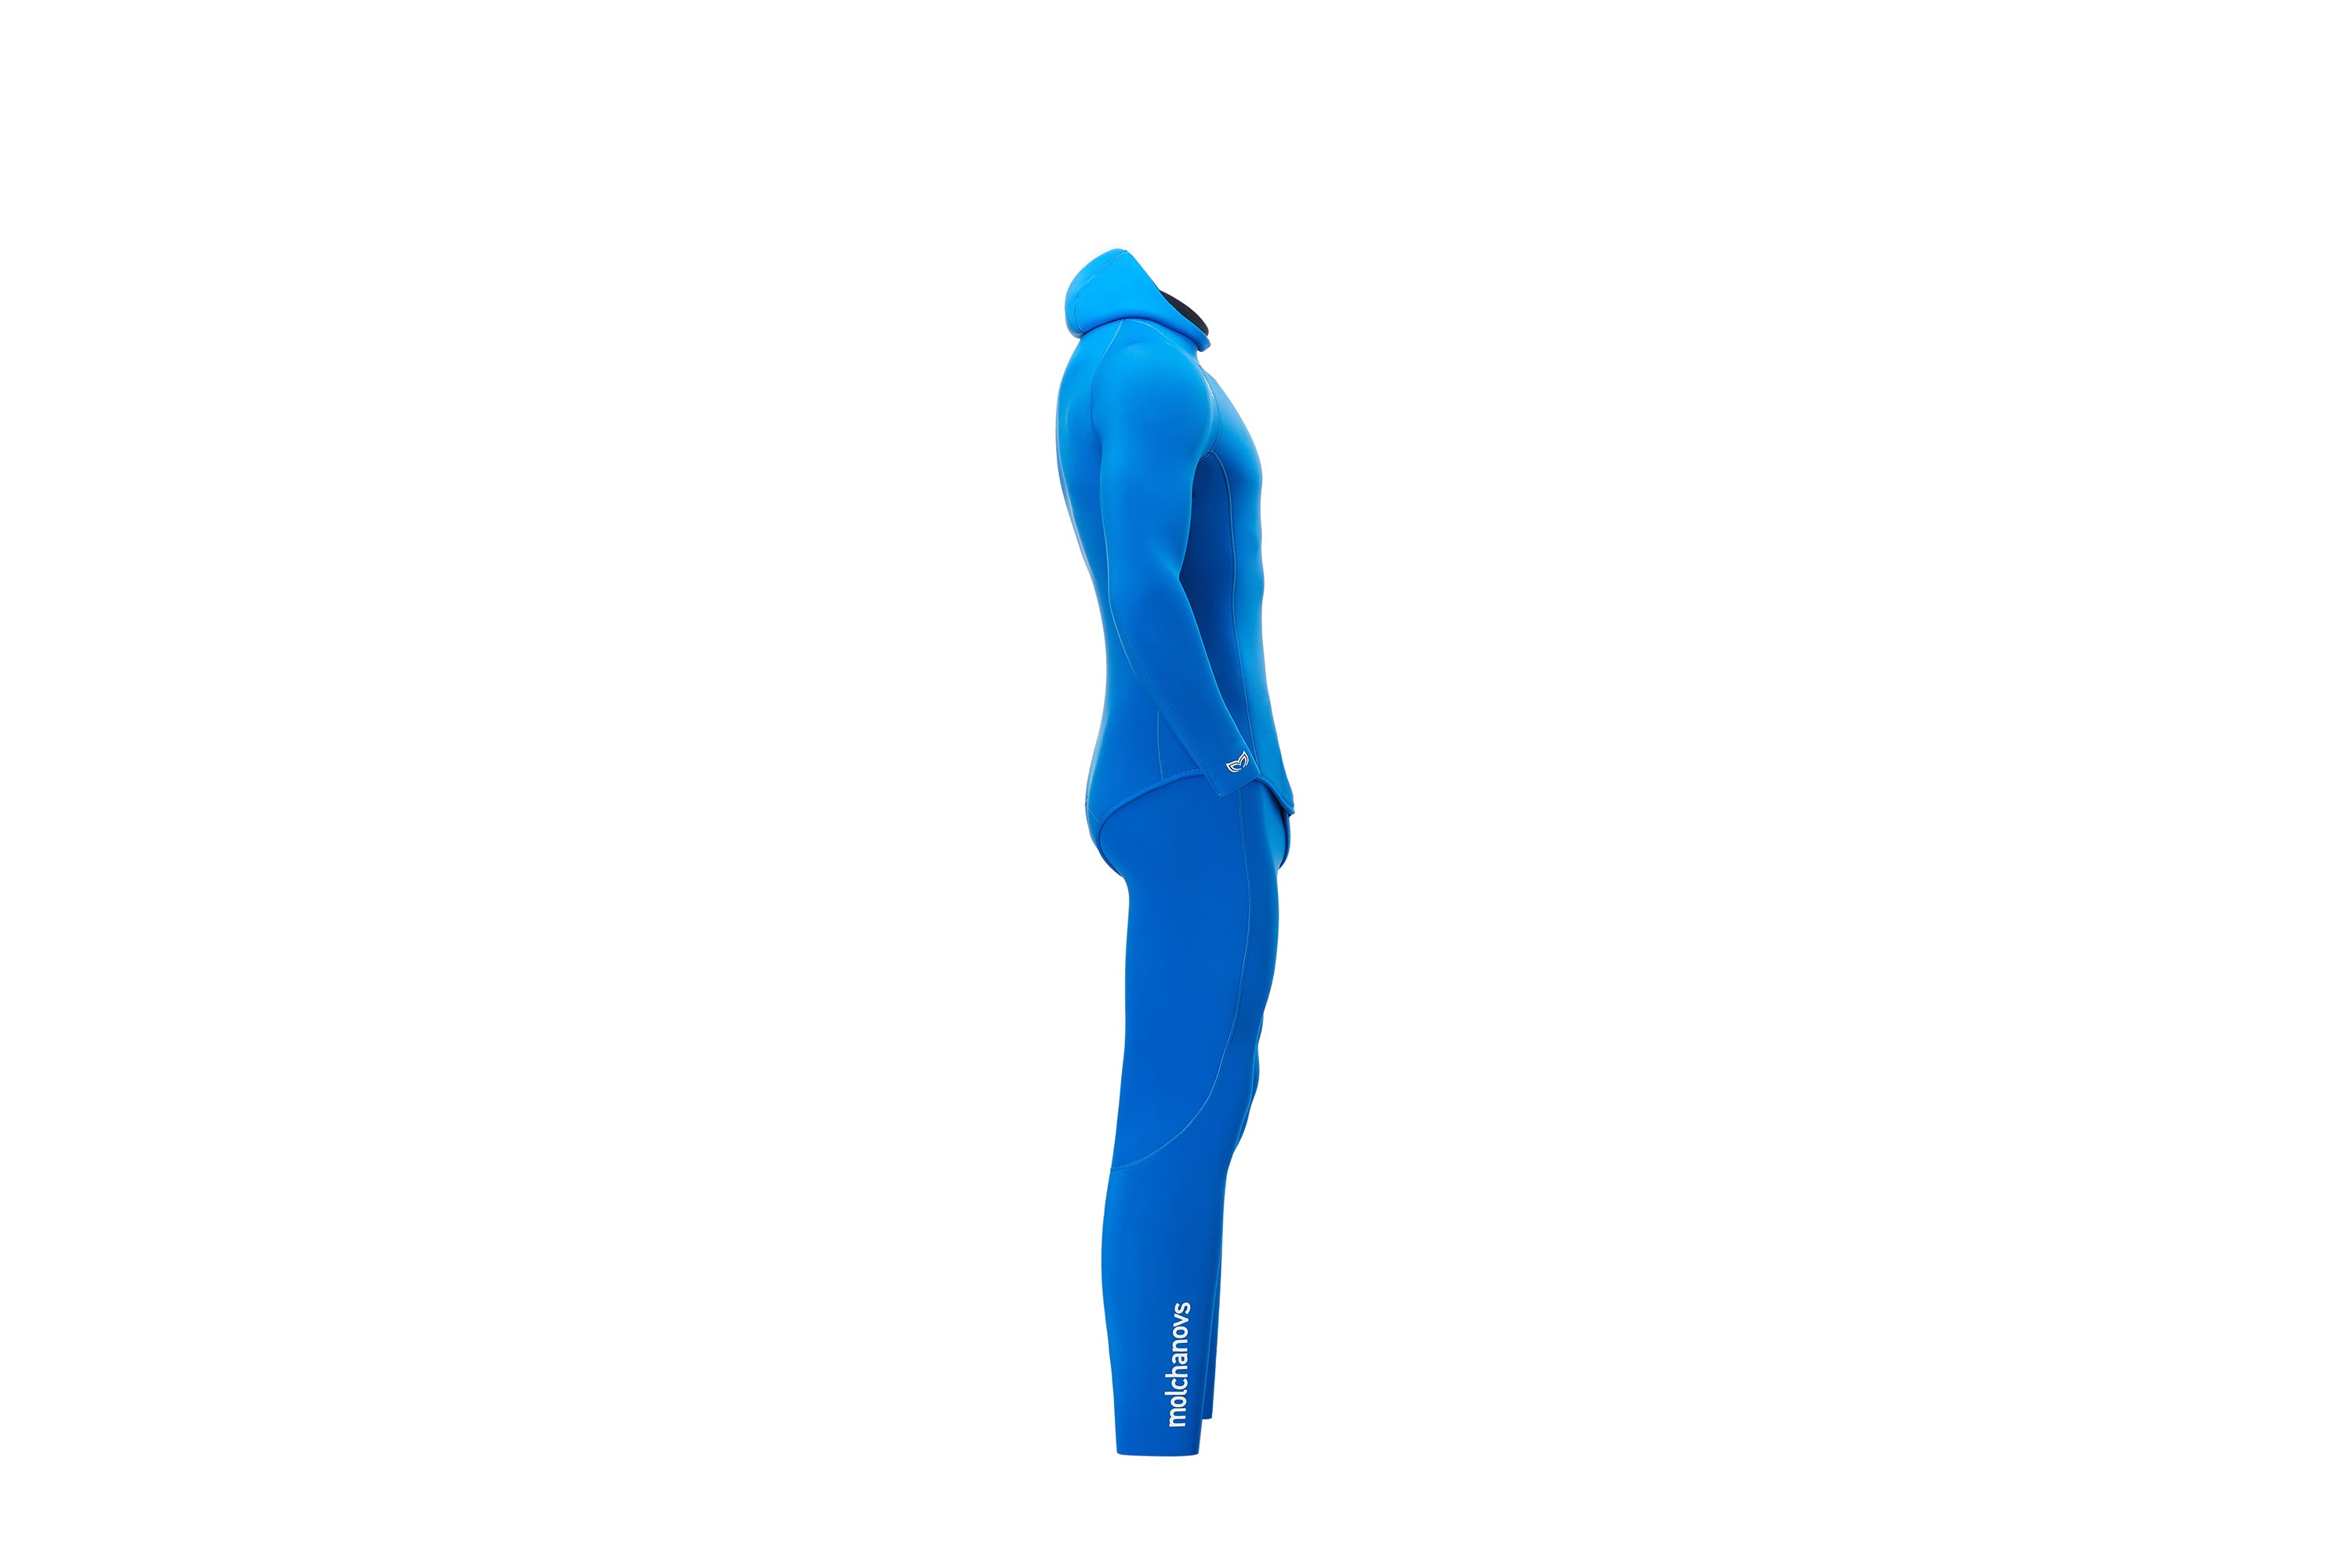 Men's SPORT Wetsuit 2.5mm Double-Lined